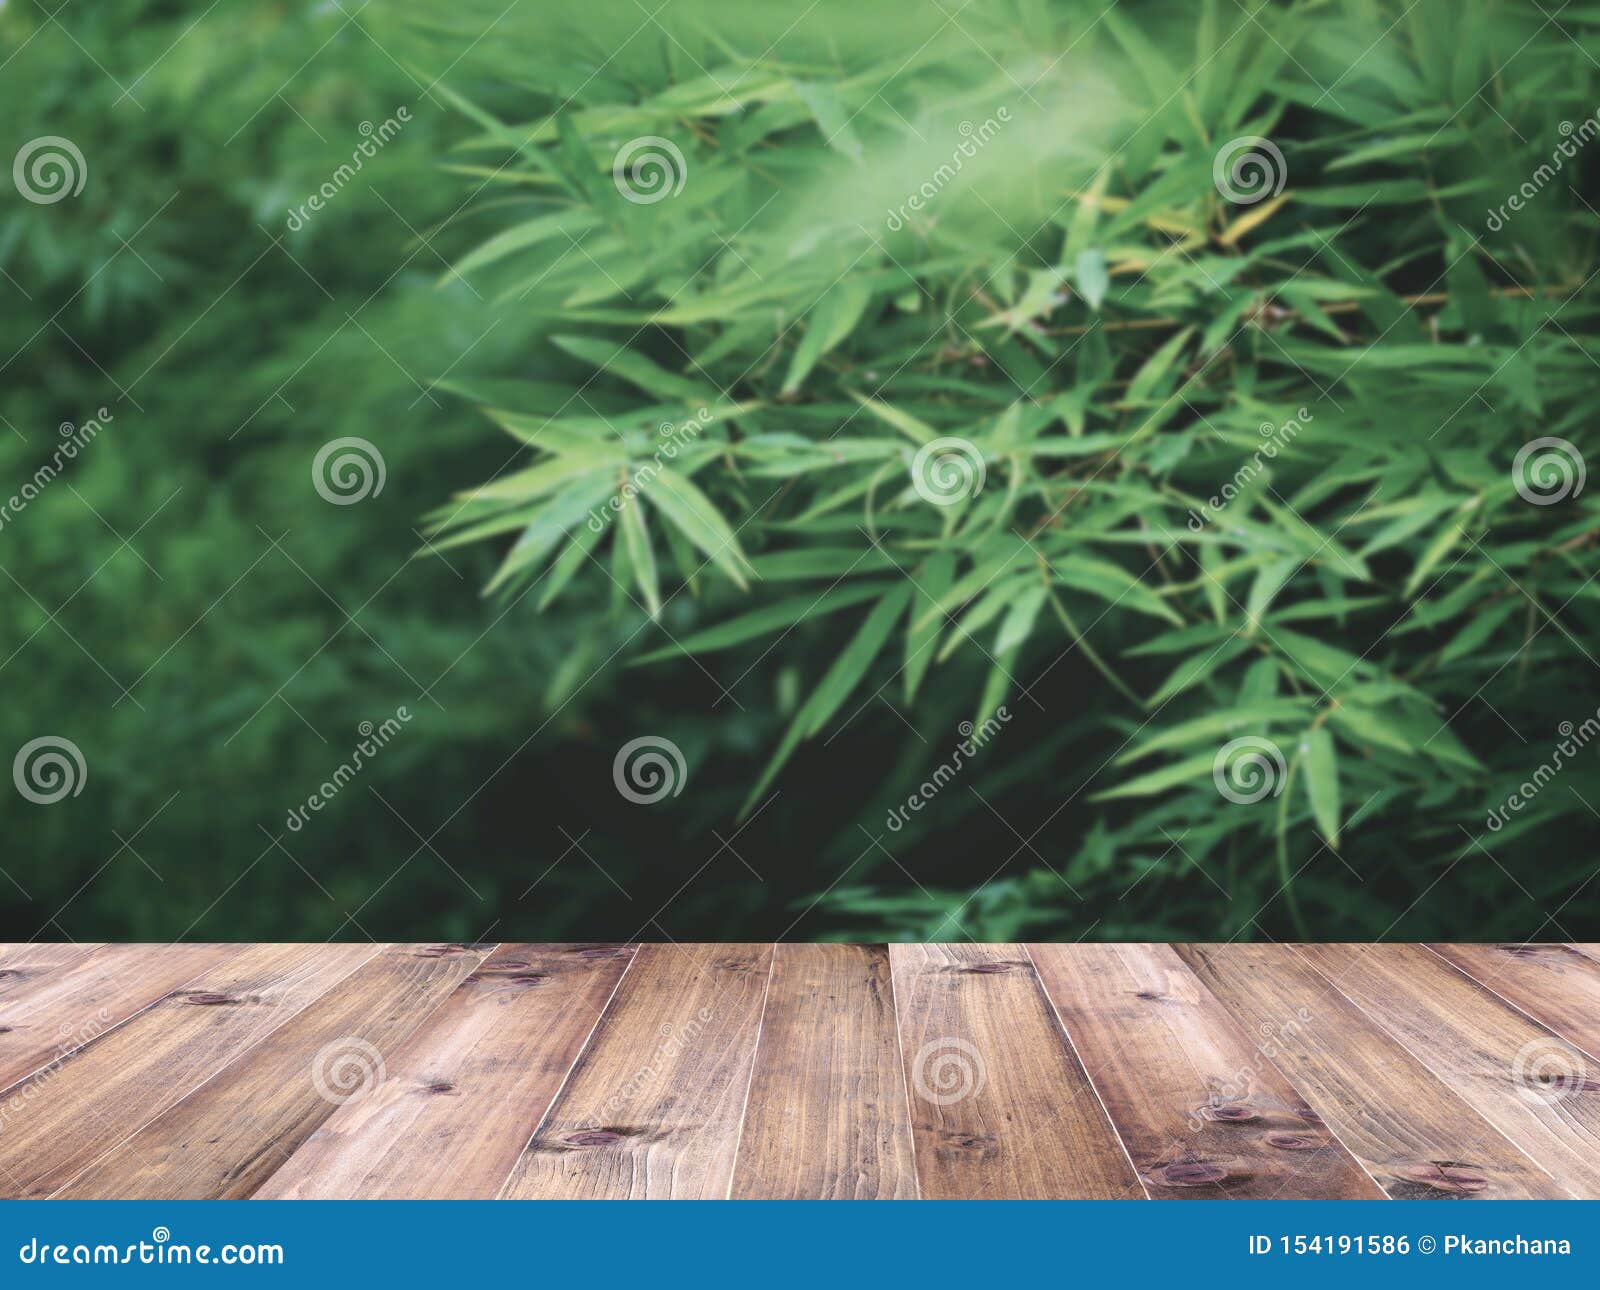 Wooden Table Top Over Green Grass In Summer Garden Stock Photo